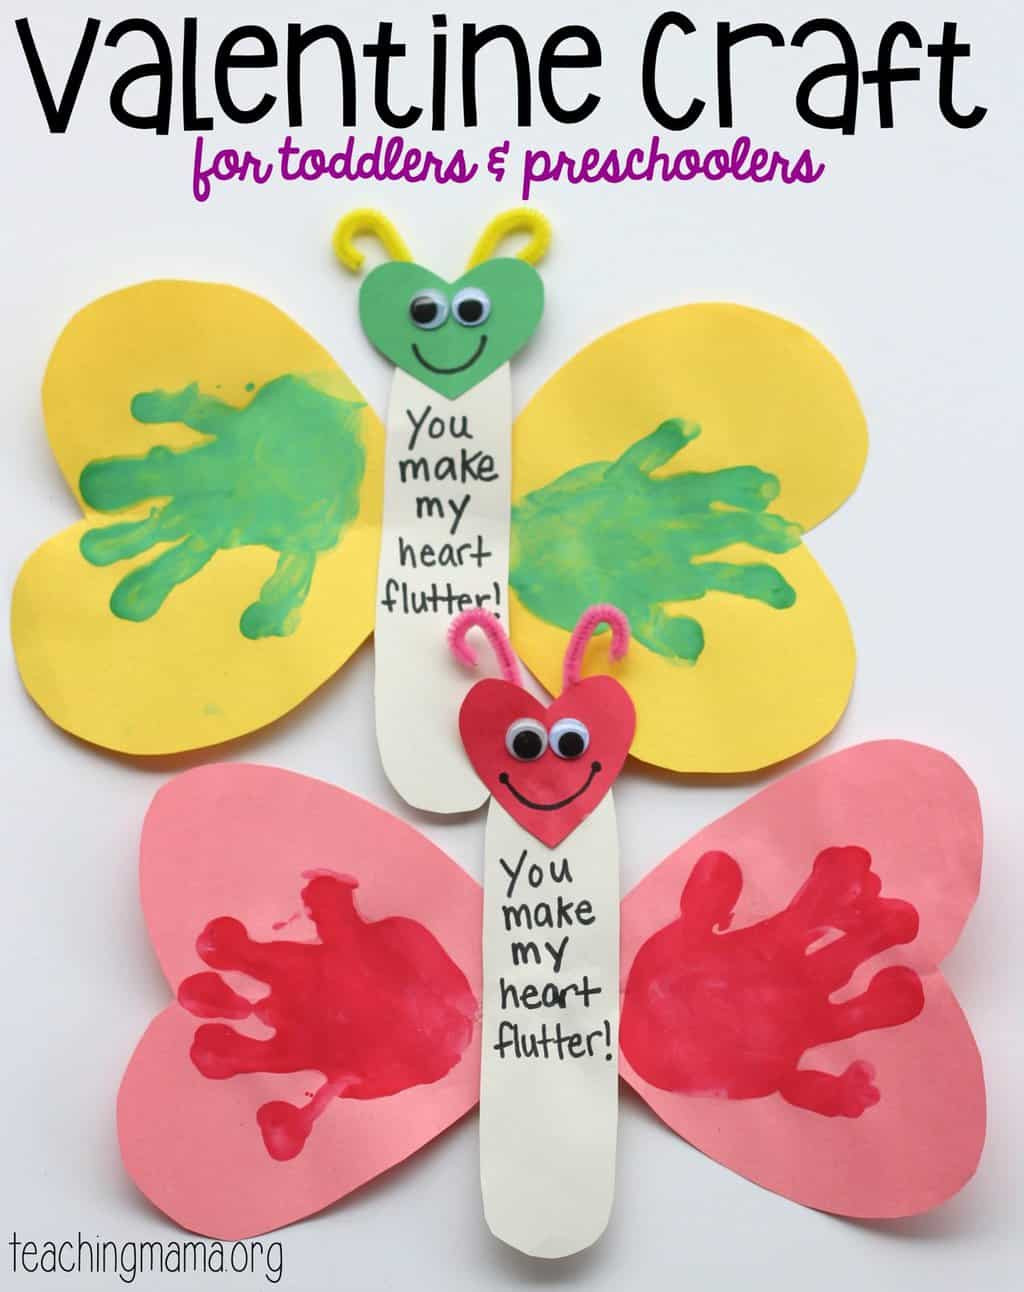 Valentine Crafts For Preschoolers Pinterest
 13 Creative Valentine s Day Crafts for Kids SoCal Field